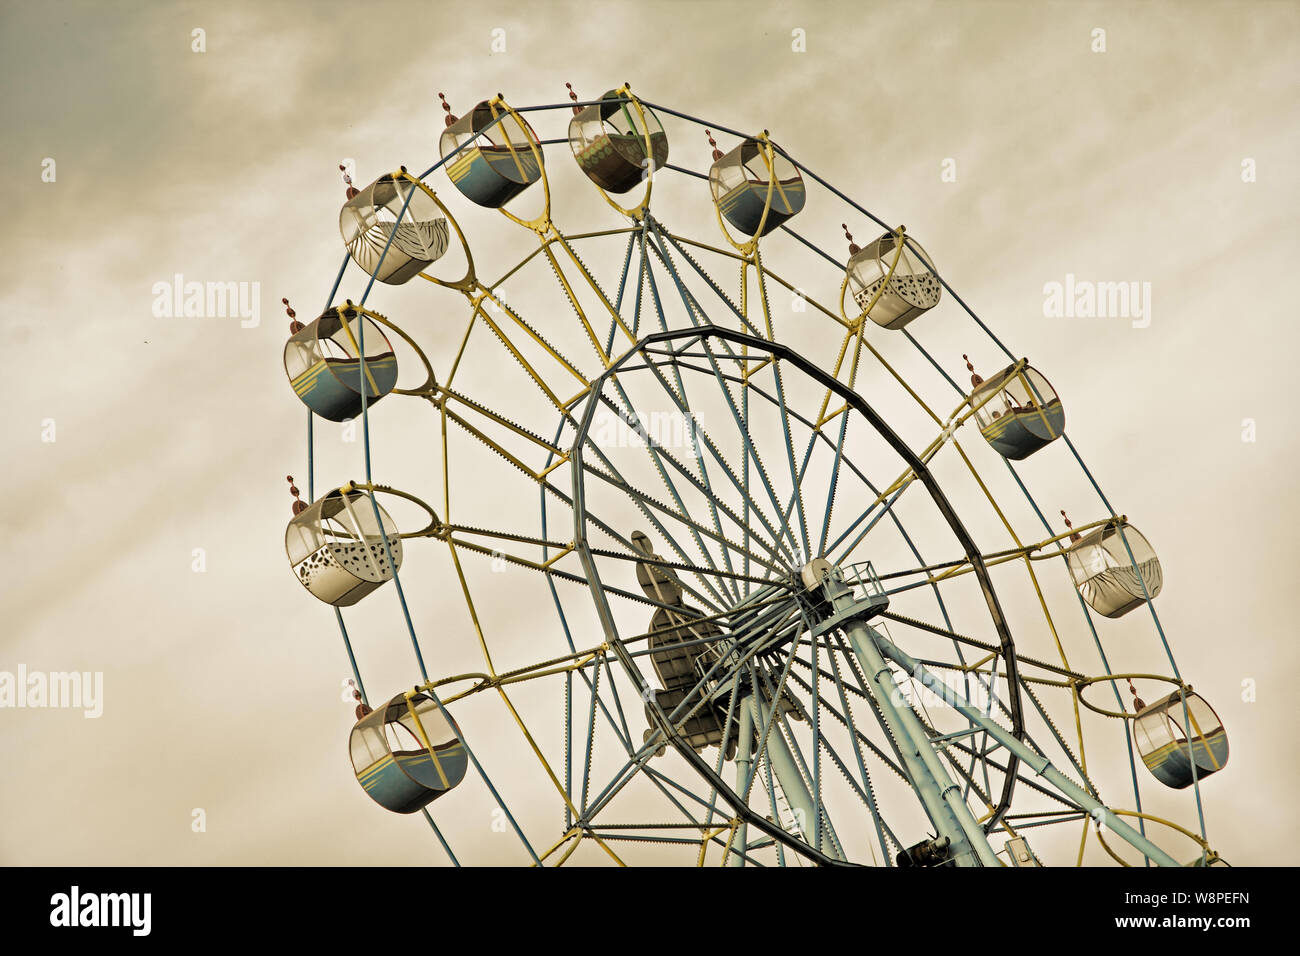 Apocalyptic ferris wheel on acrid sky grey backround. Chernobylconcept. Stock Photo